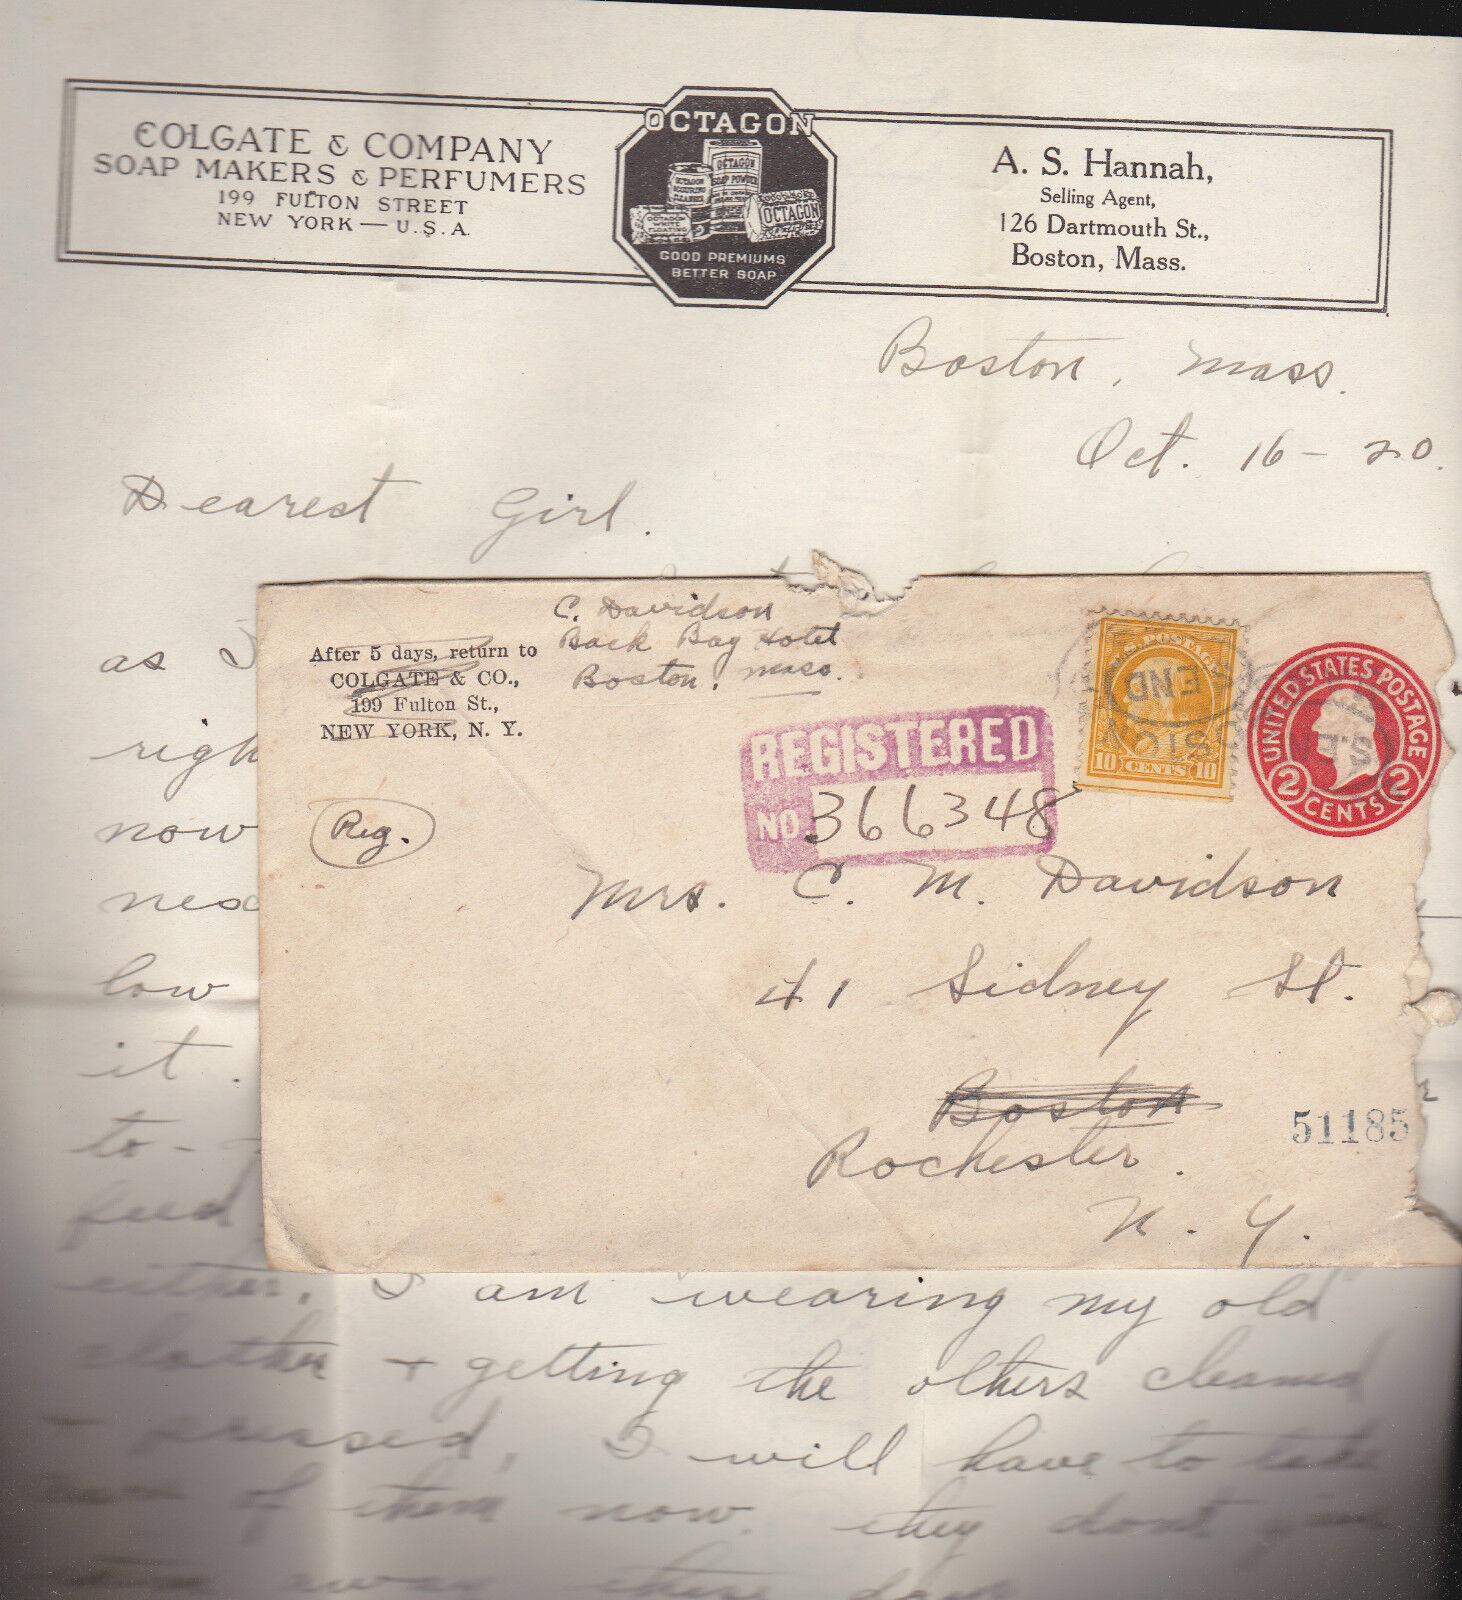 Colgate & Company Letterhead Envelope 1920 Registered Cover Stamps 